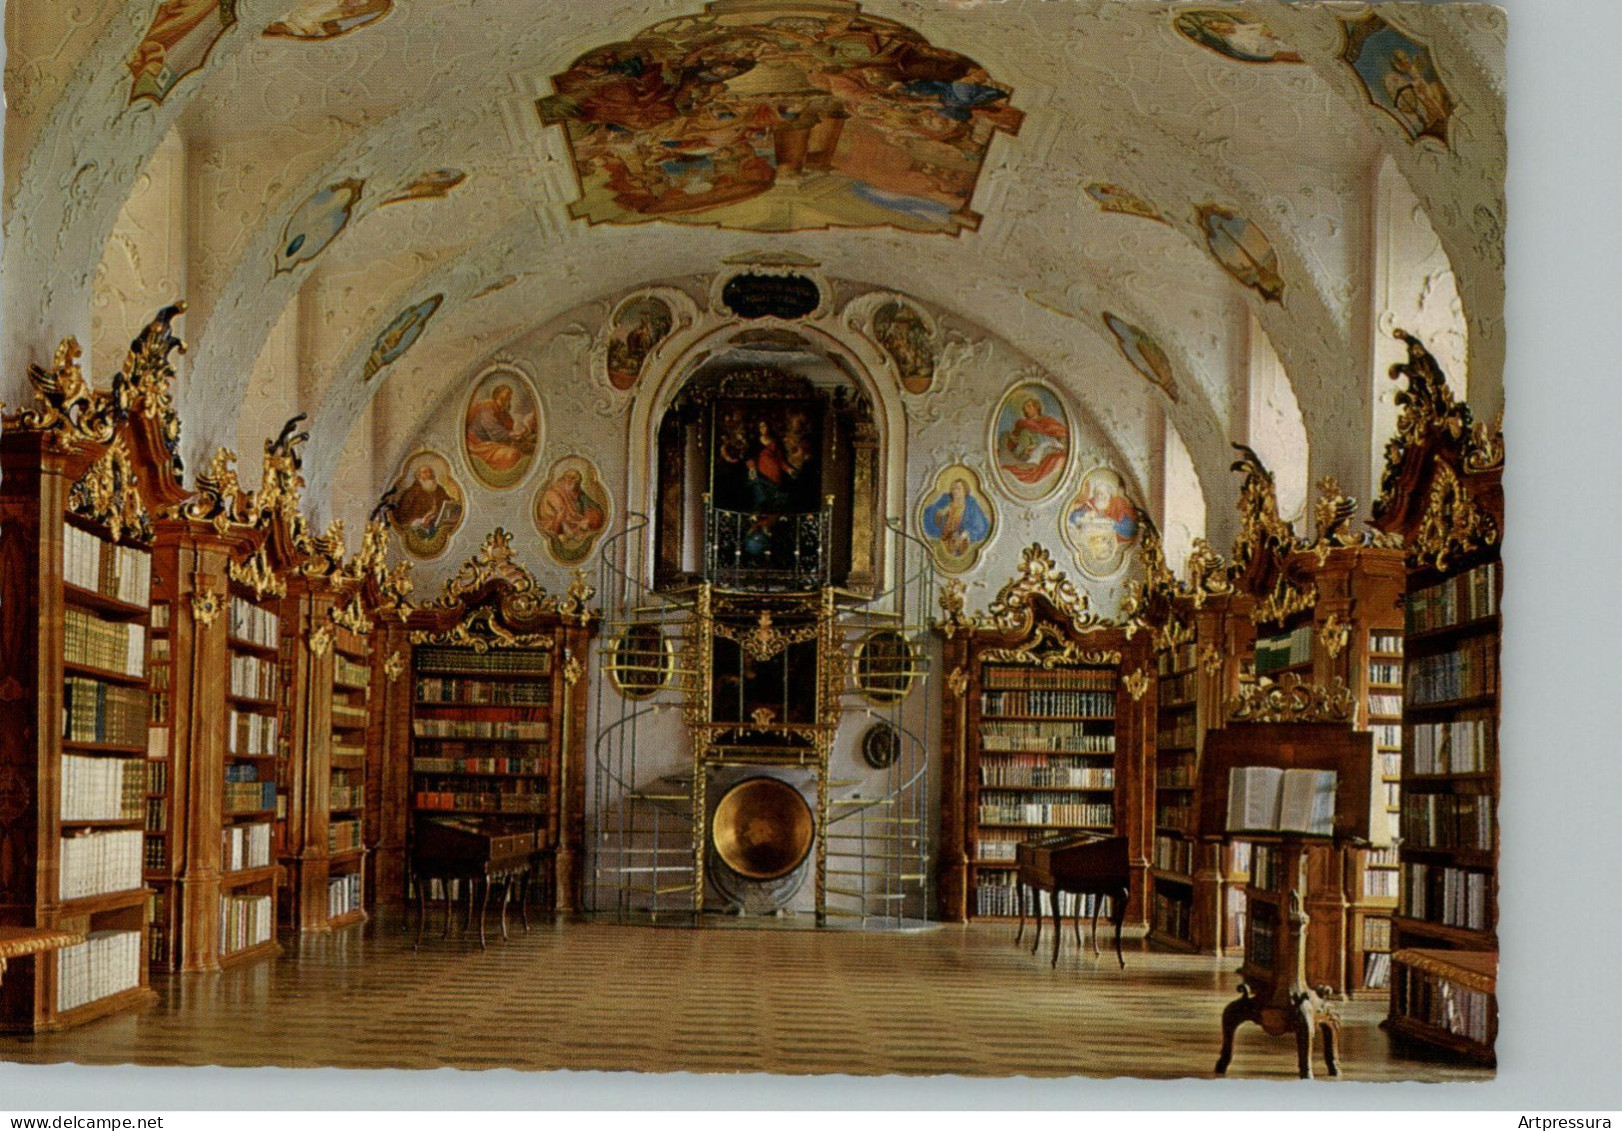 AK - Vorau - Chorherrenstift - Bibliothek - Ca. 1980er - 10x 15cm - #AK1126# - Vorau